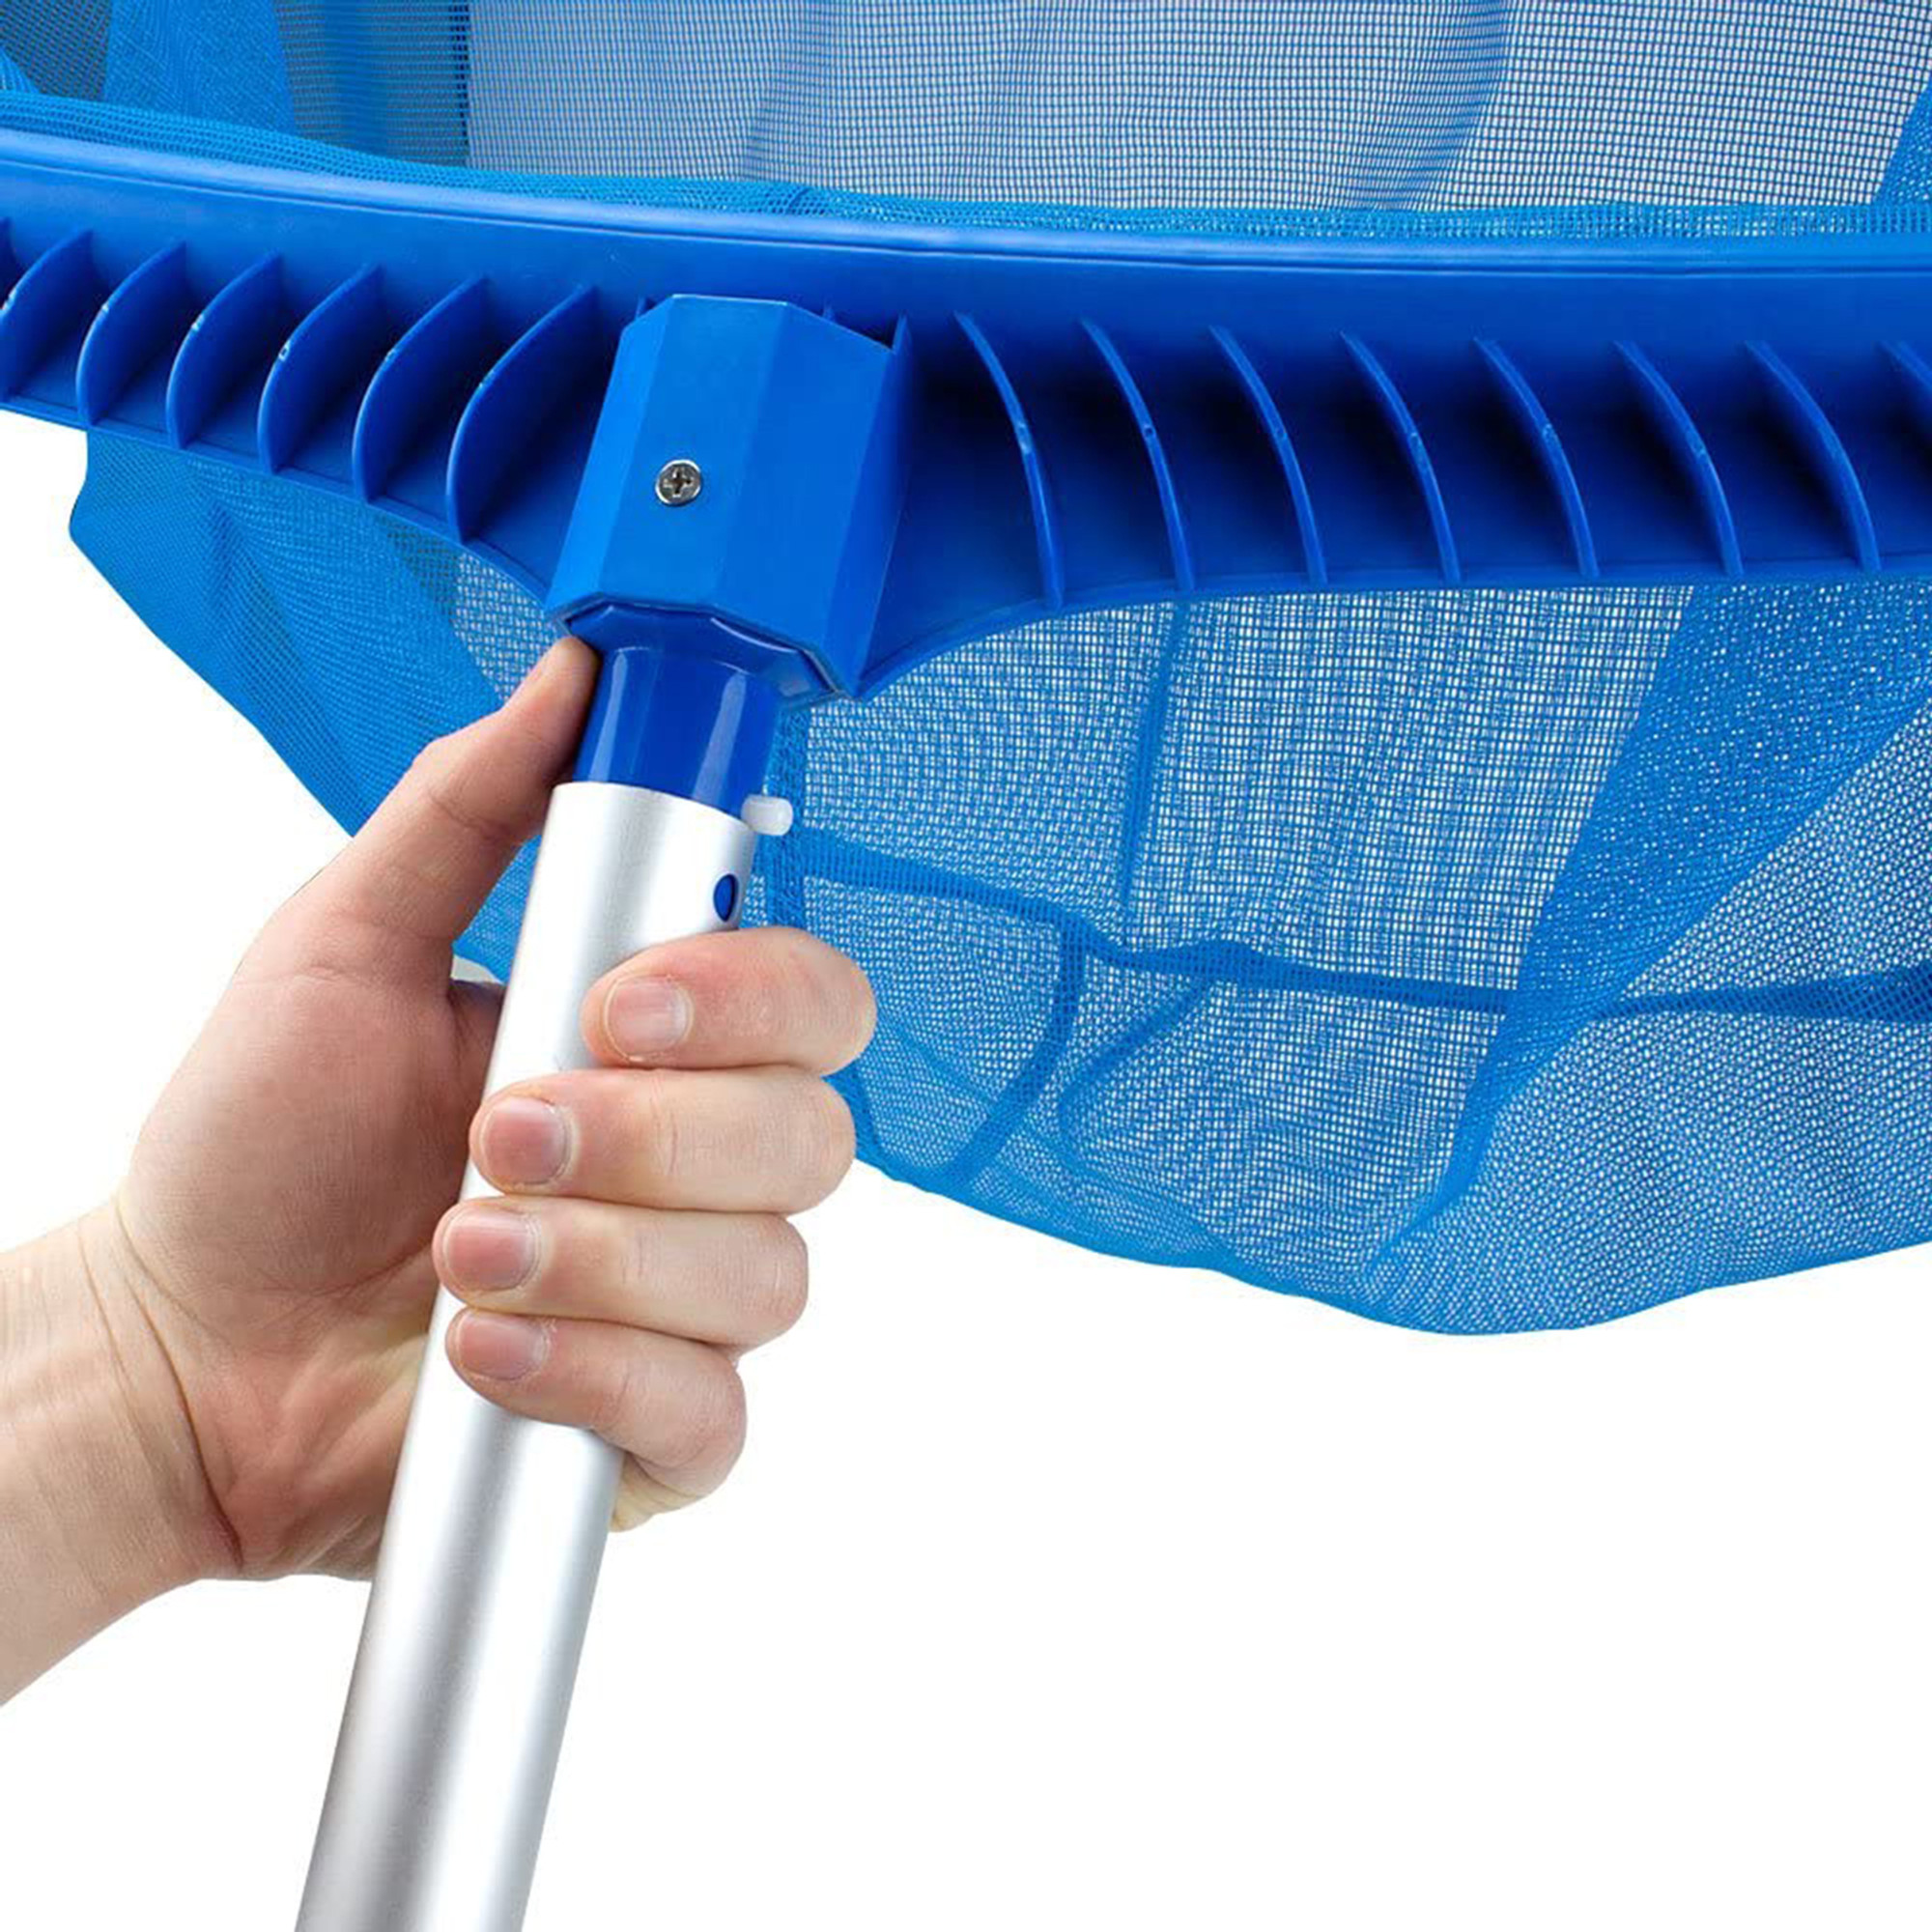 Pool Skimmer Net For Cleaning 18'' Wide Heavy Duty Pool Leaf Rake